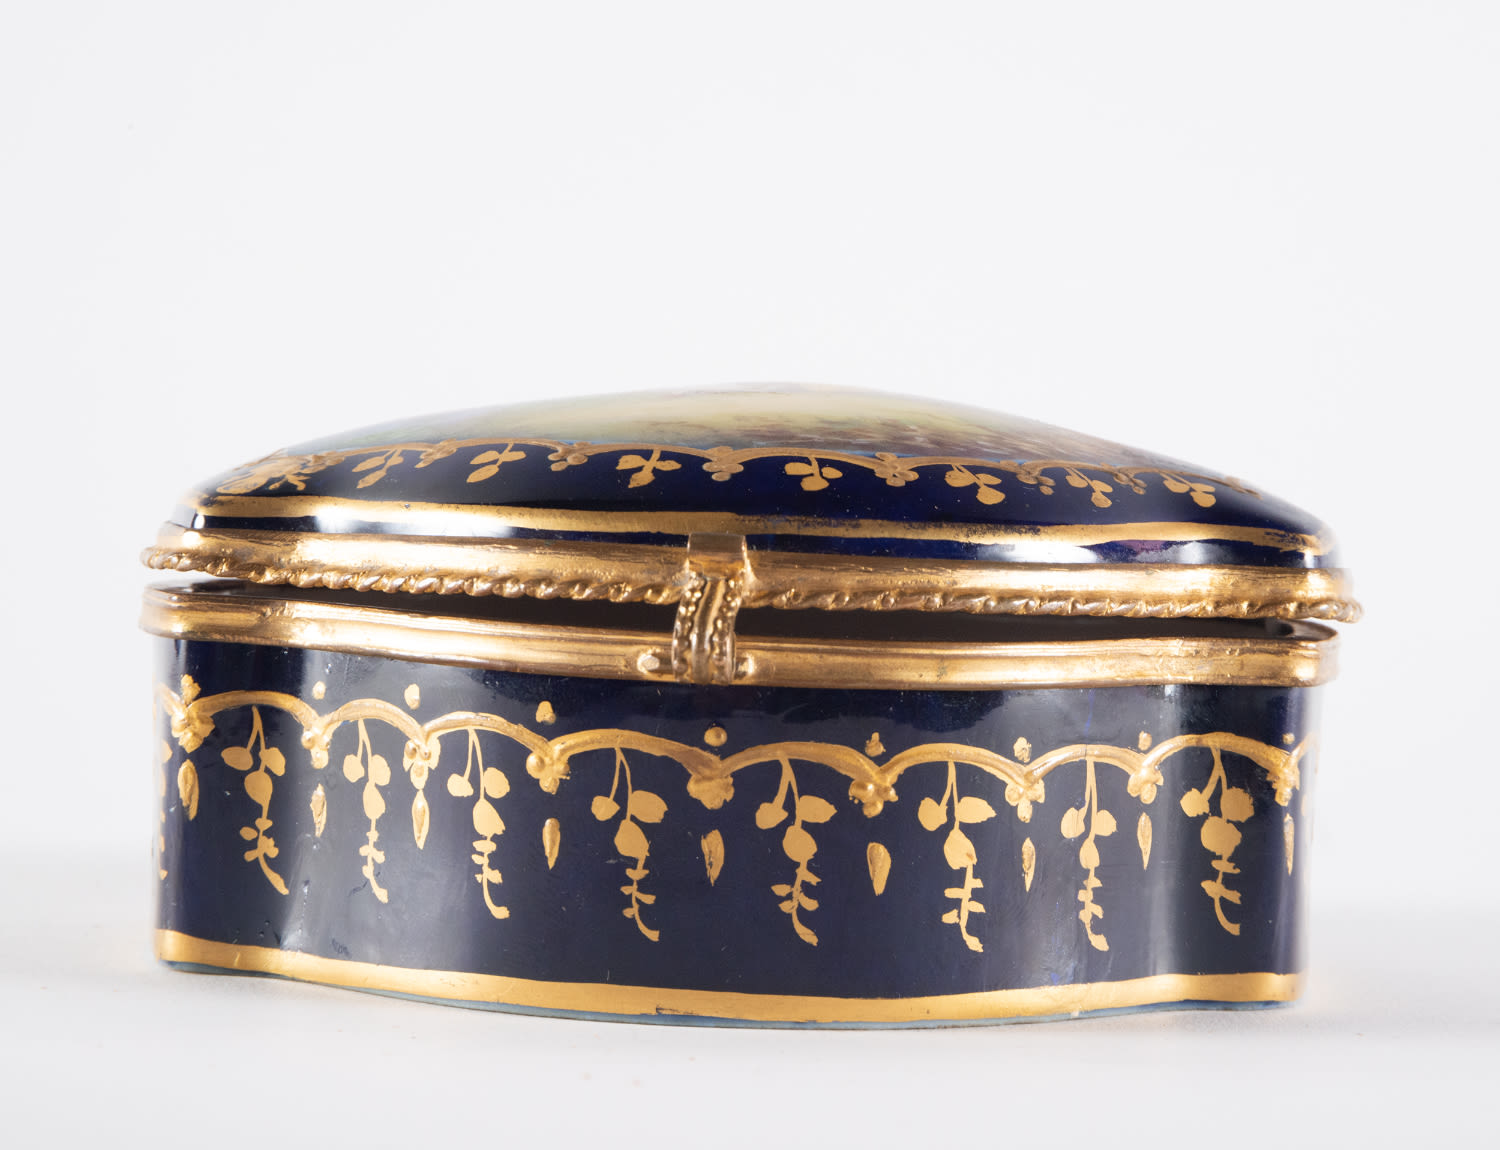 Enamelled Sèvres porcelain jewelry box, 19th century, Tuileries series